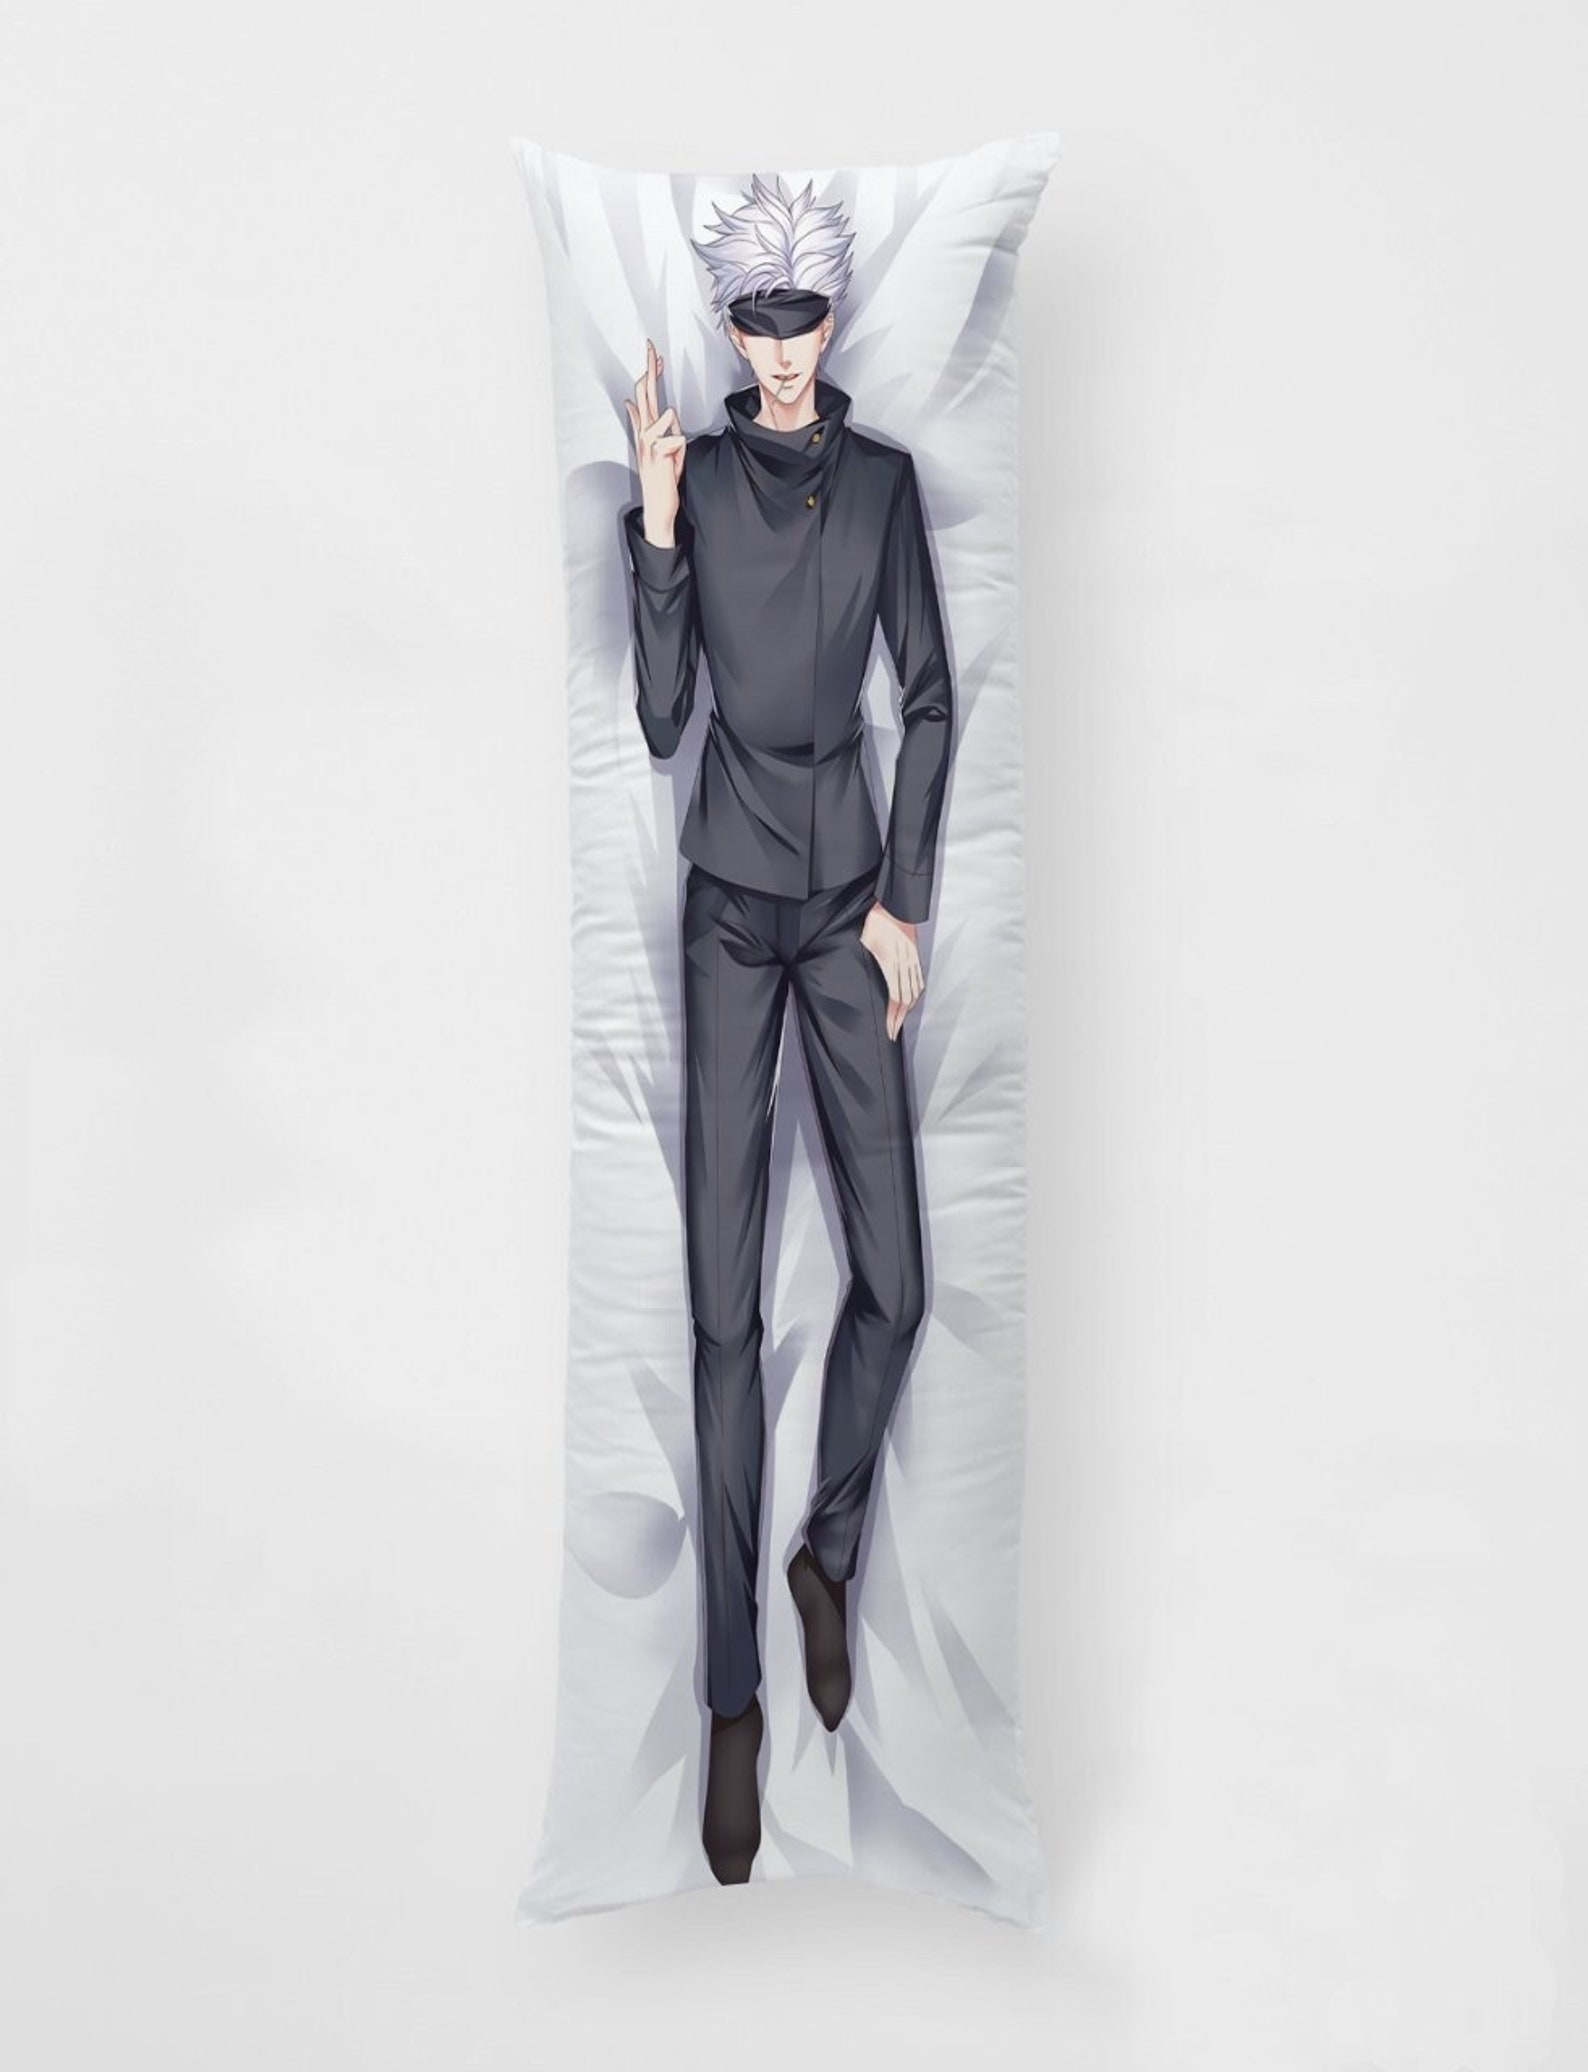 Gojo Satoru Body Pillow Anime Body Pillow Anime Body Etsy Finland